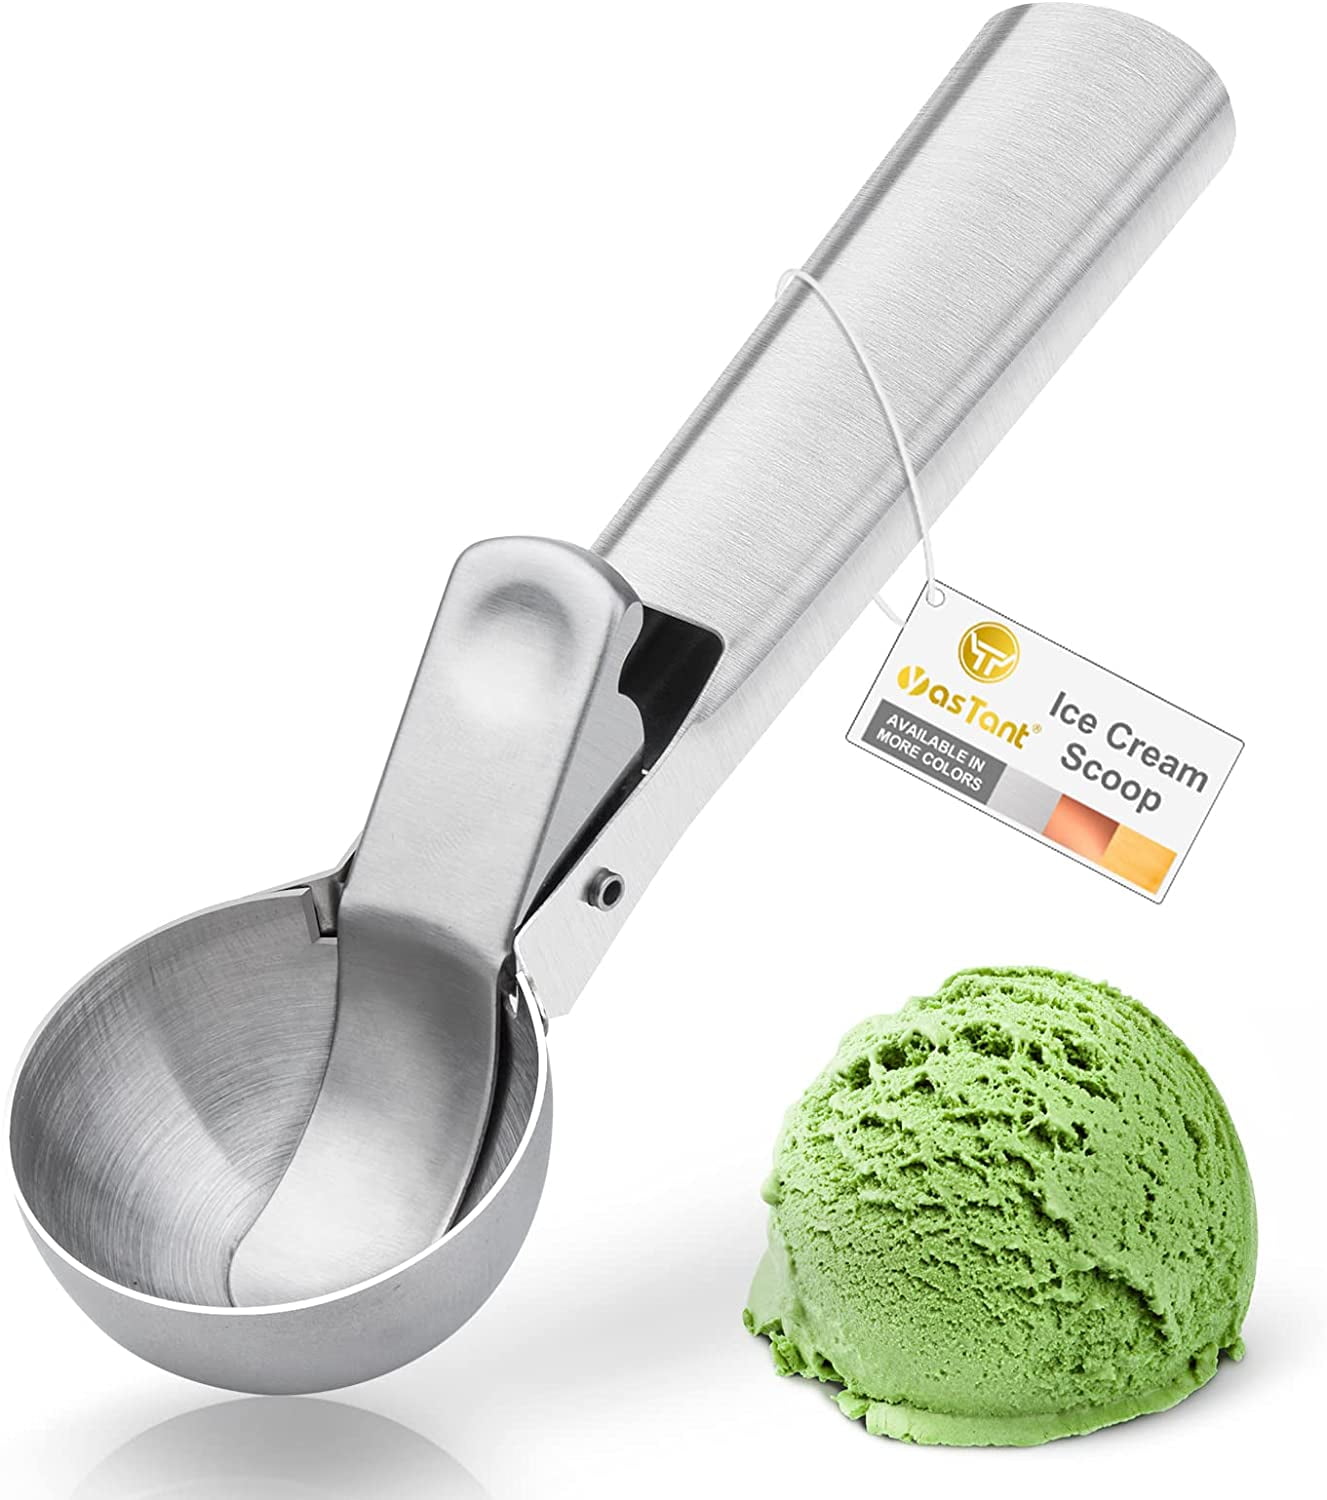 Culinary Elements Ice Cream Scoop, Trigger 1 Ea, Shop